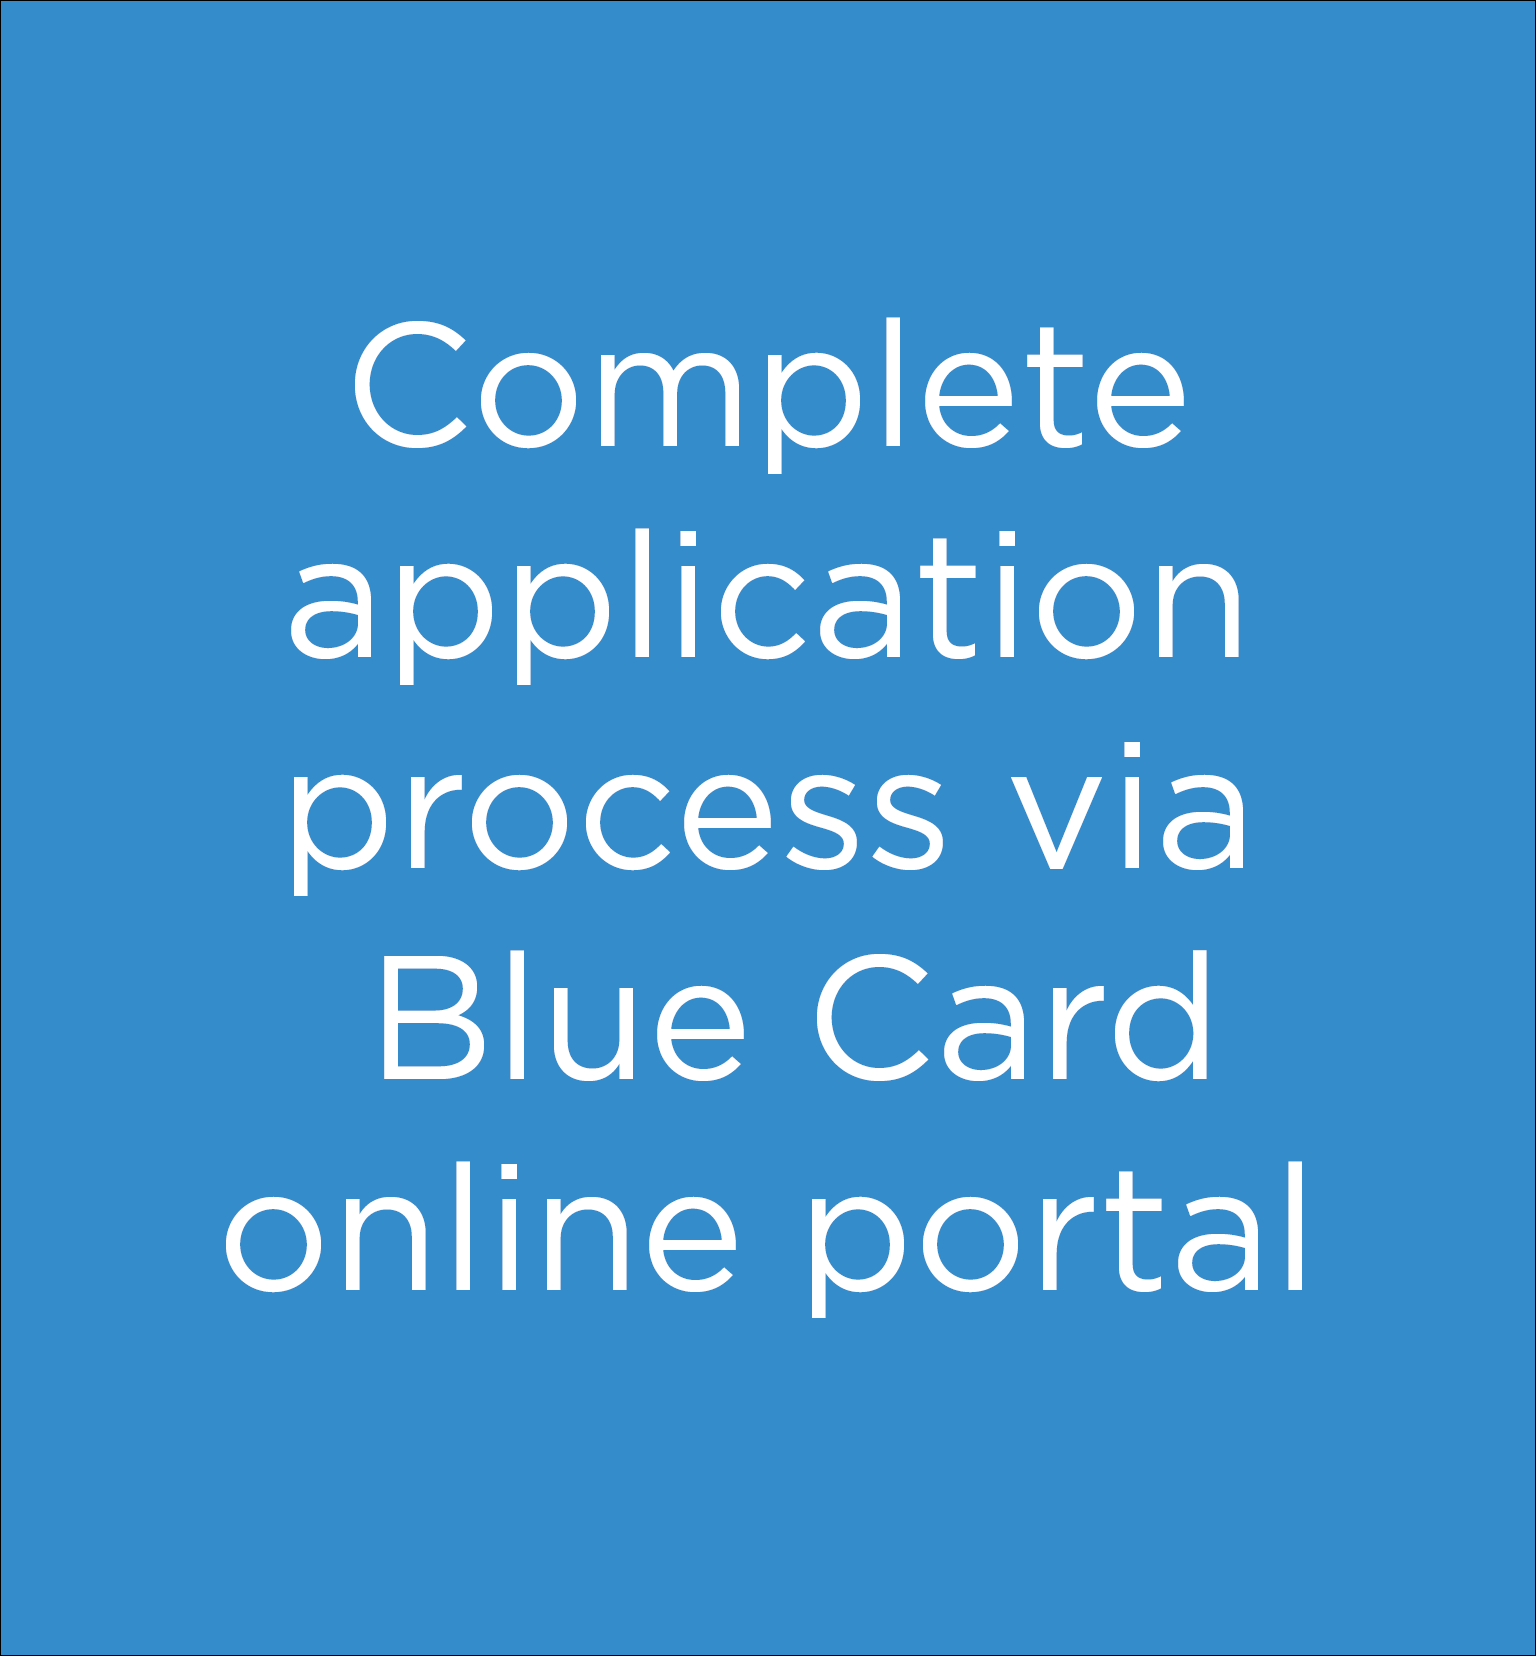 Complete application process via Blue Card online portal